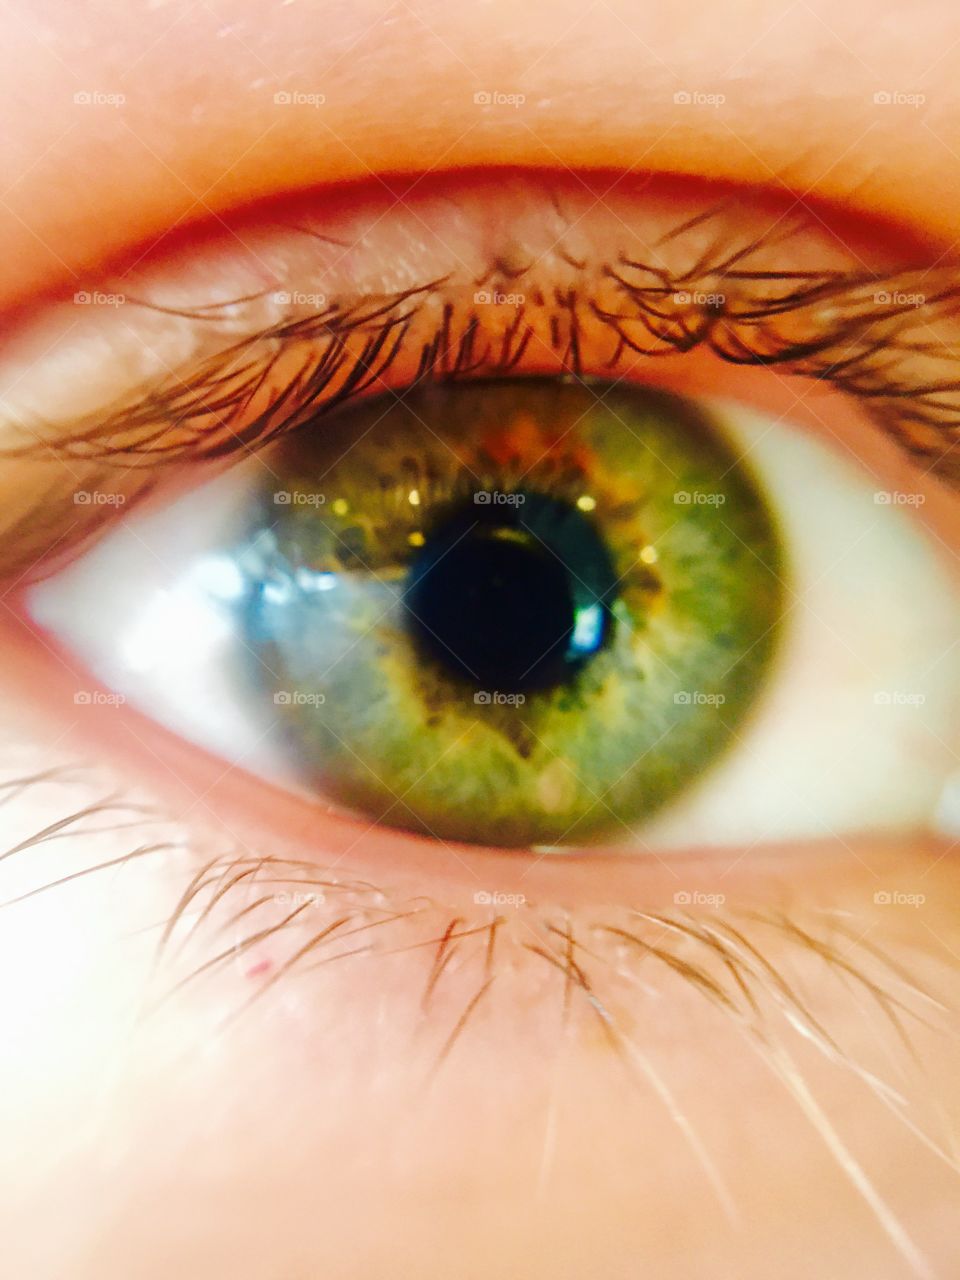 Green eye. Picture Of my eye